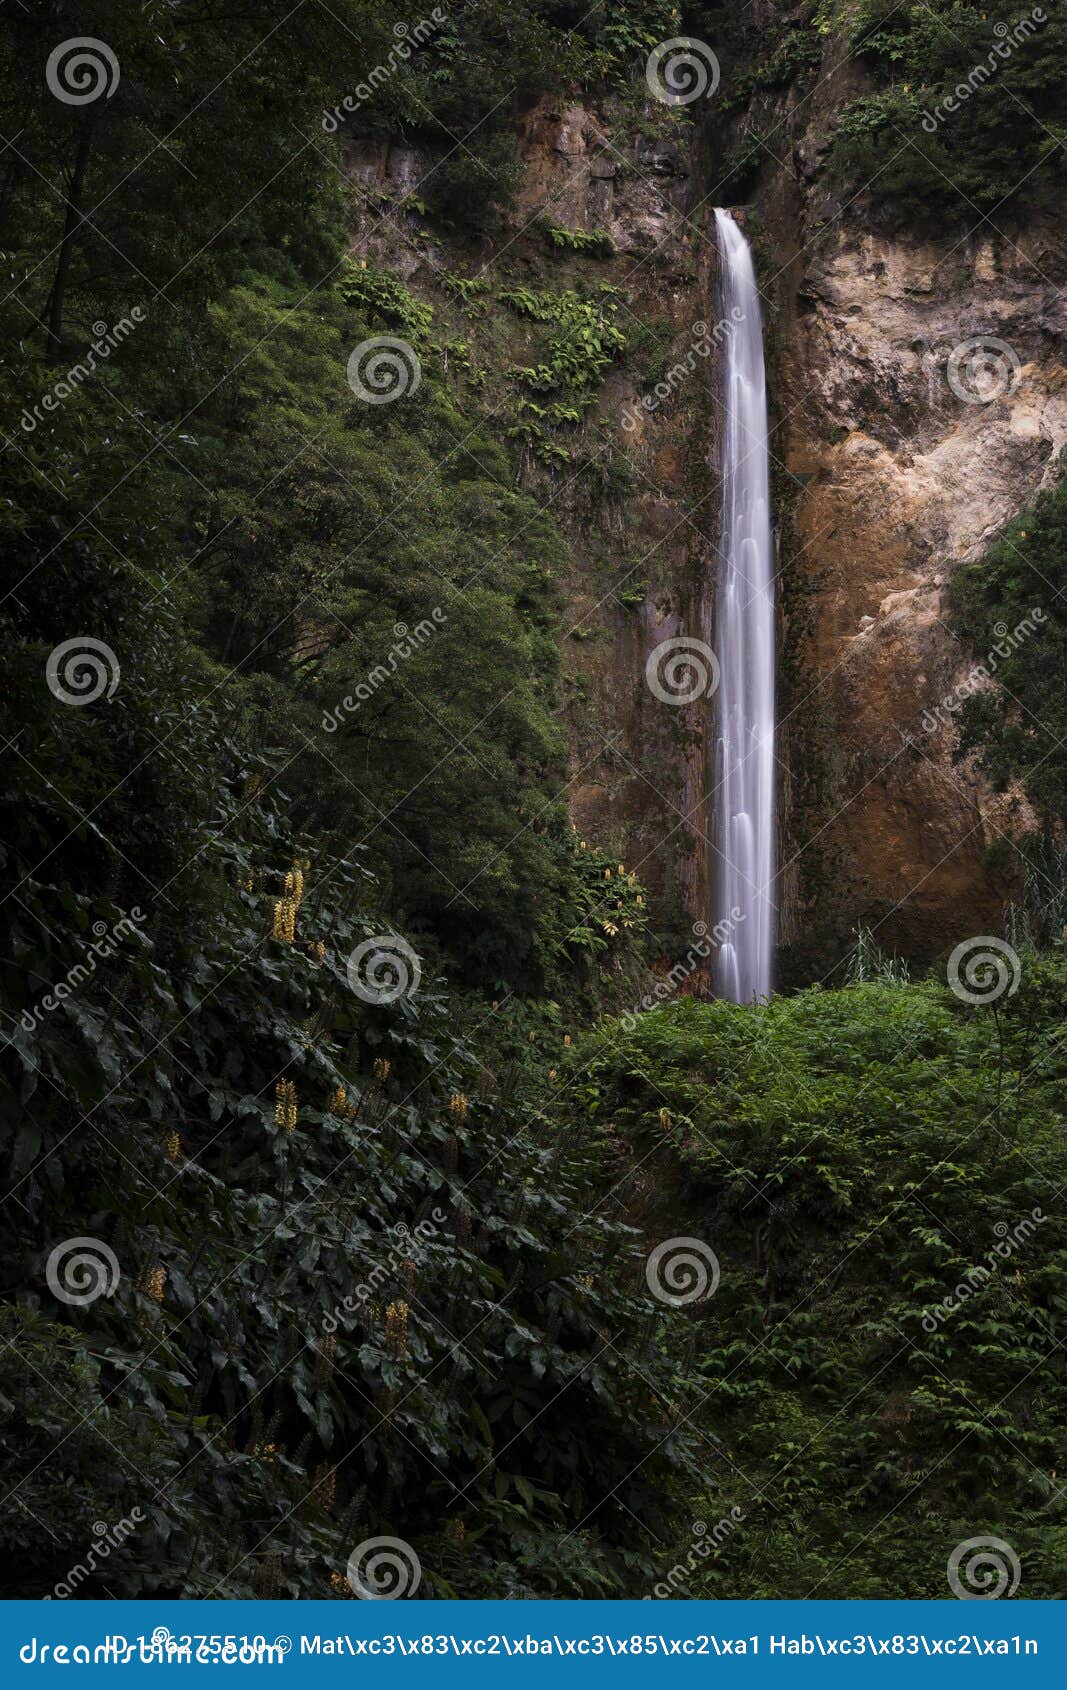 hot waterfall of ribeira acores